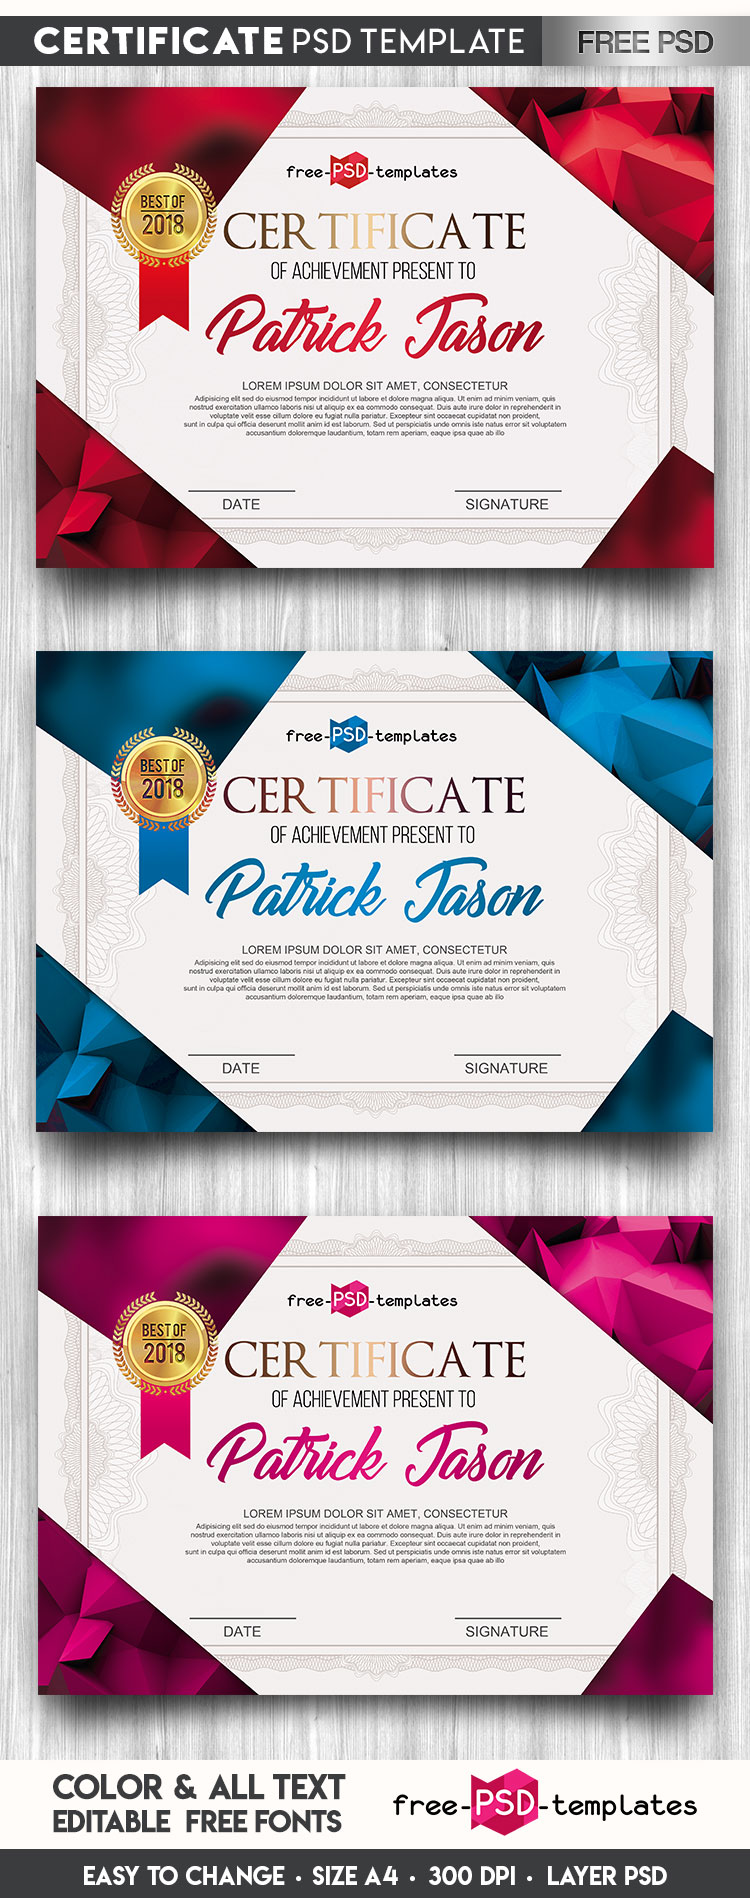 certificate design psd free